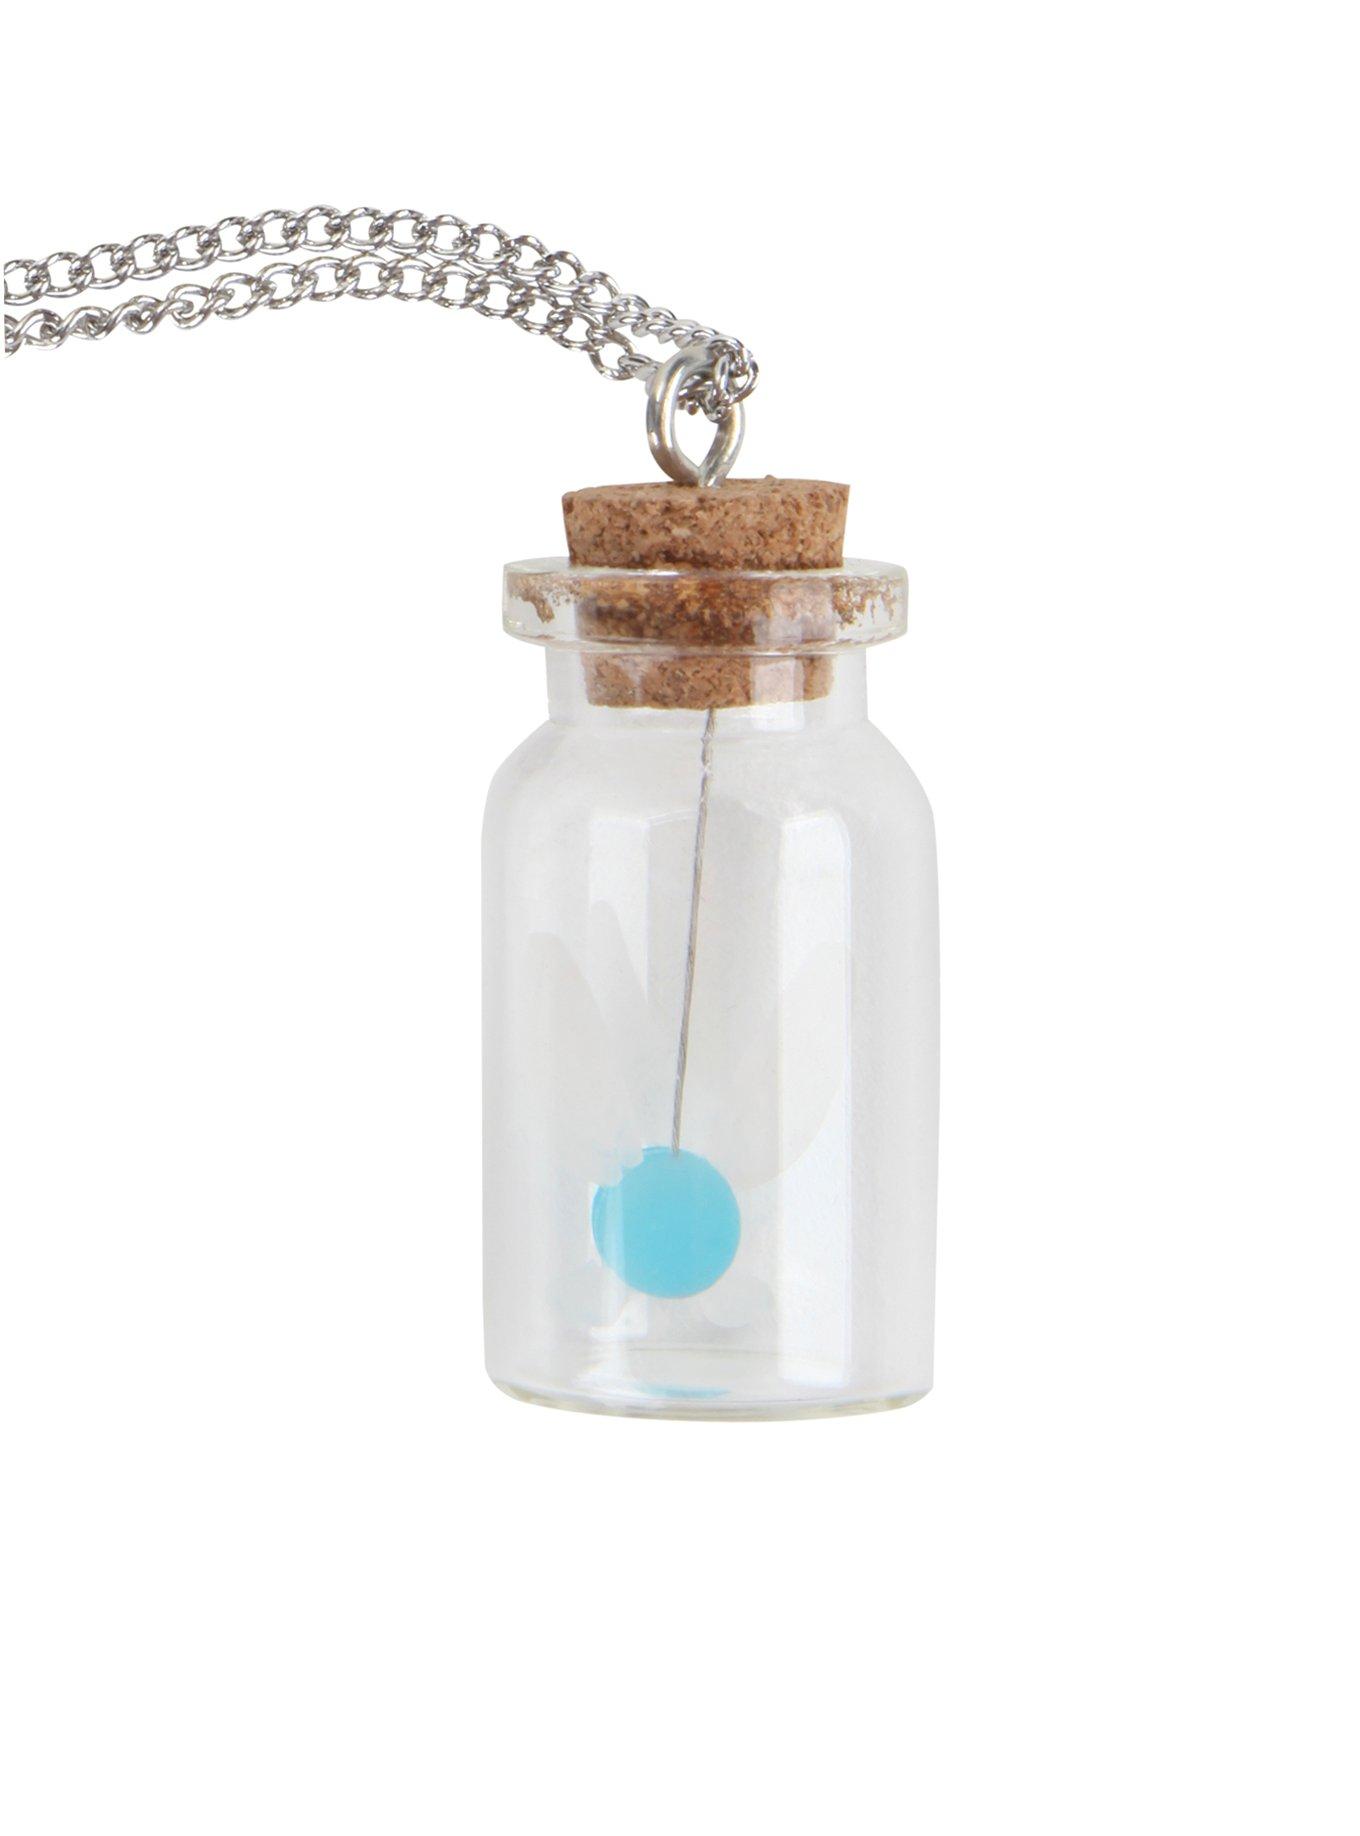 Legend of Zelda Fairy in a Bottle Charm Necklace 